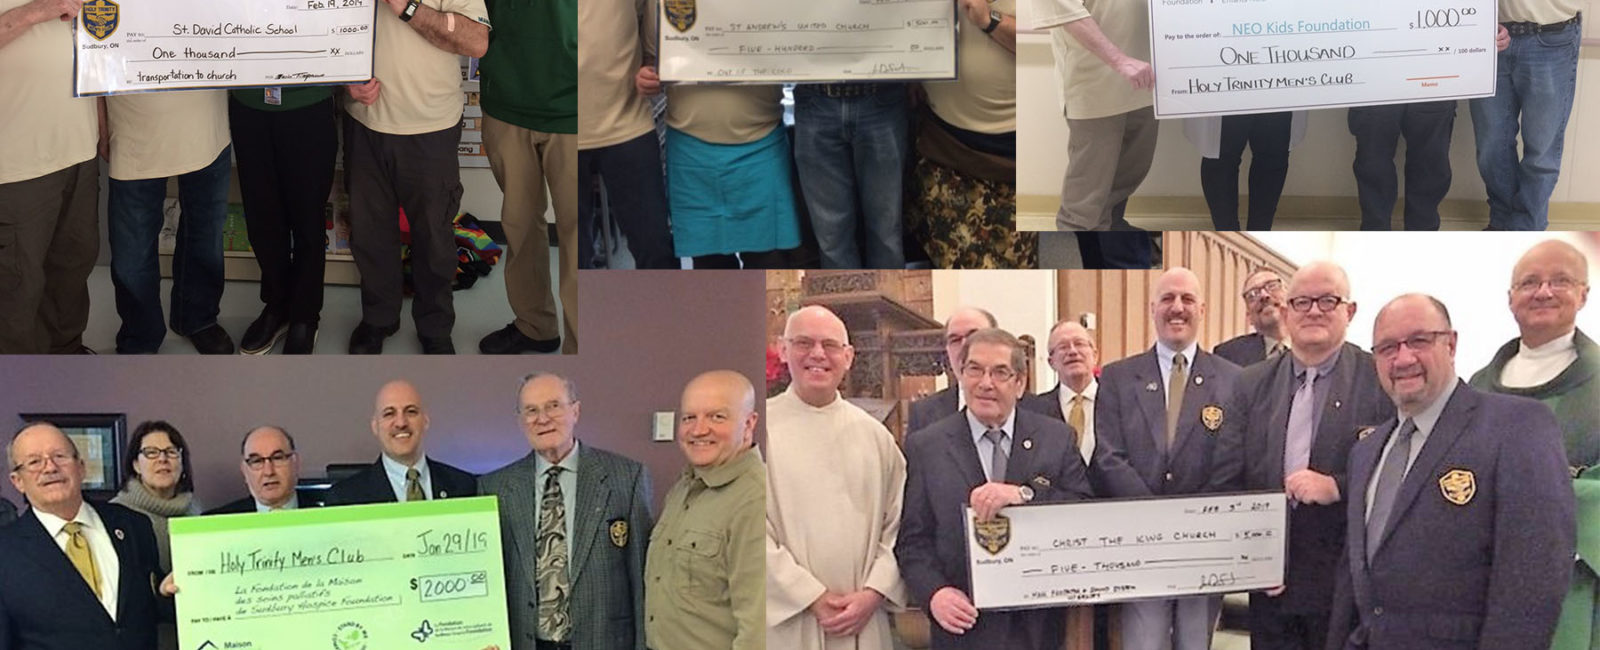 Holy Trinity Men's Club donates $10,000 to local charities